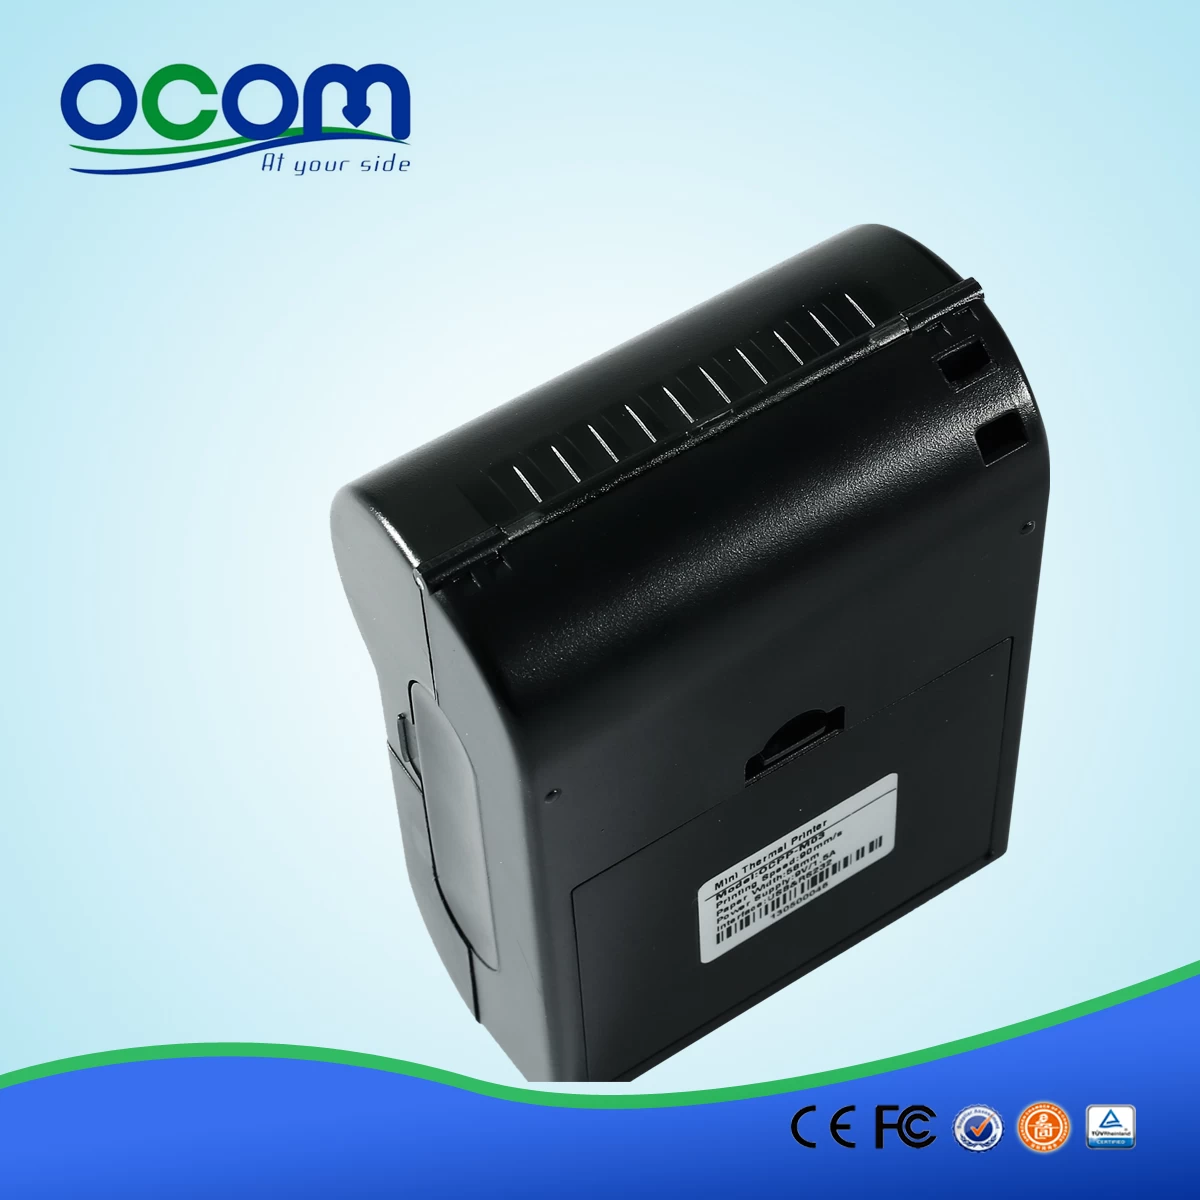 China made 58mm mini bluetooth POS printer-OCPP-M03